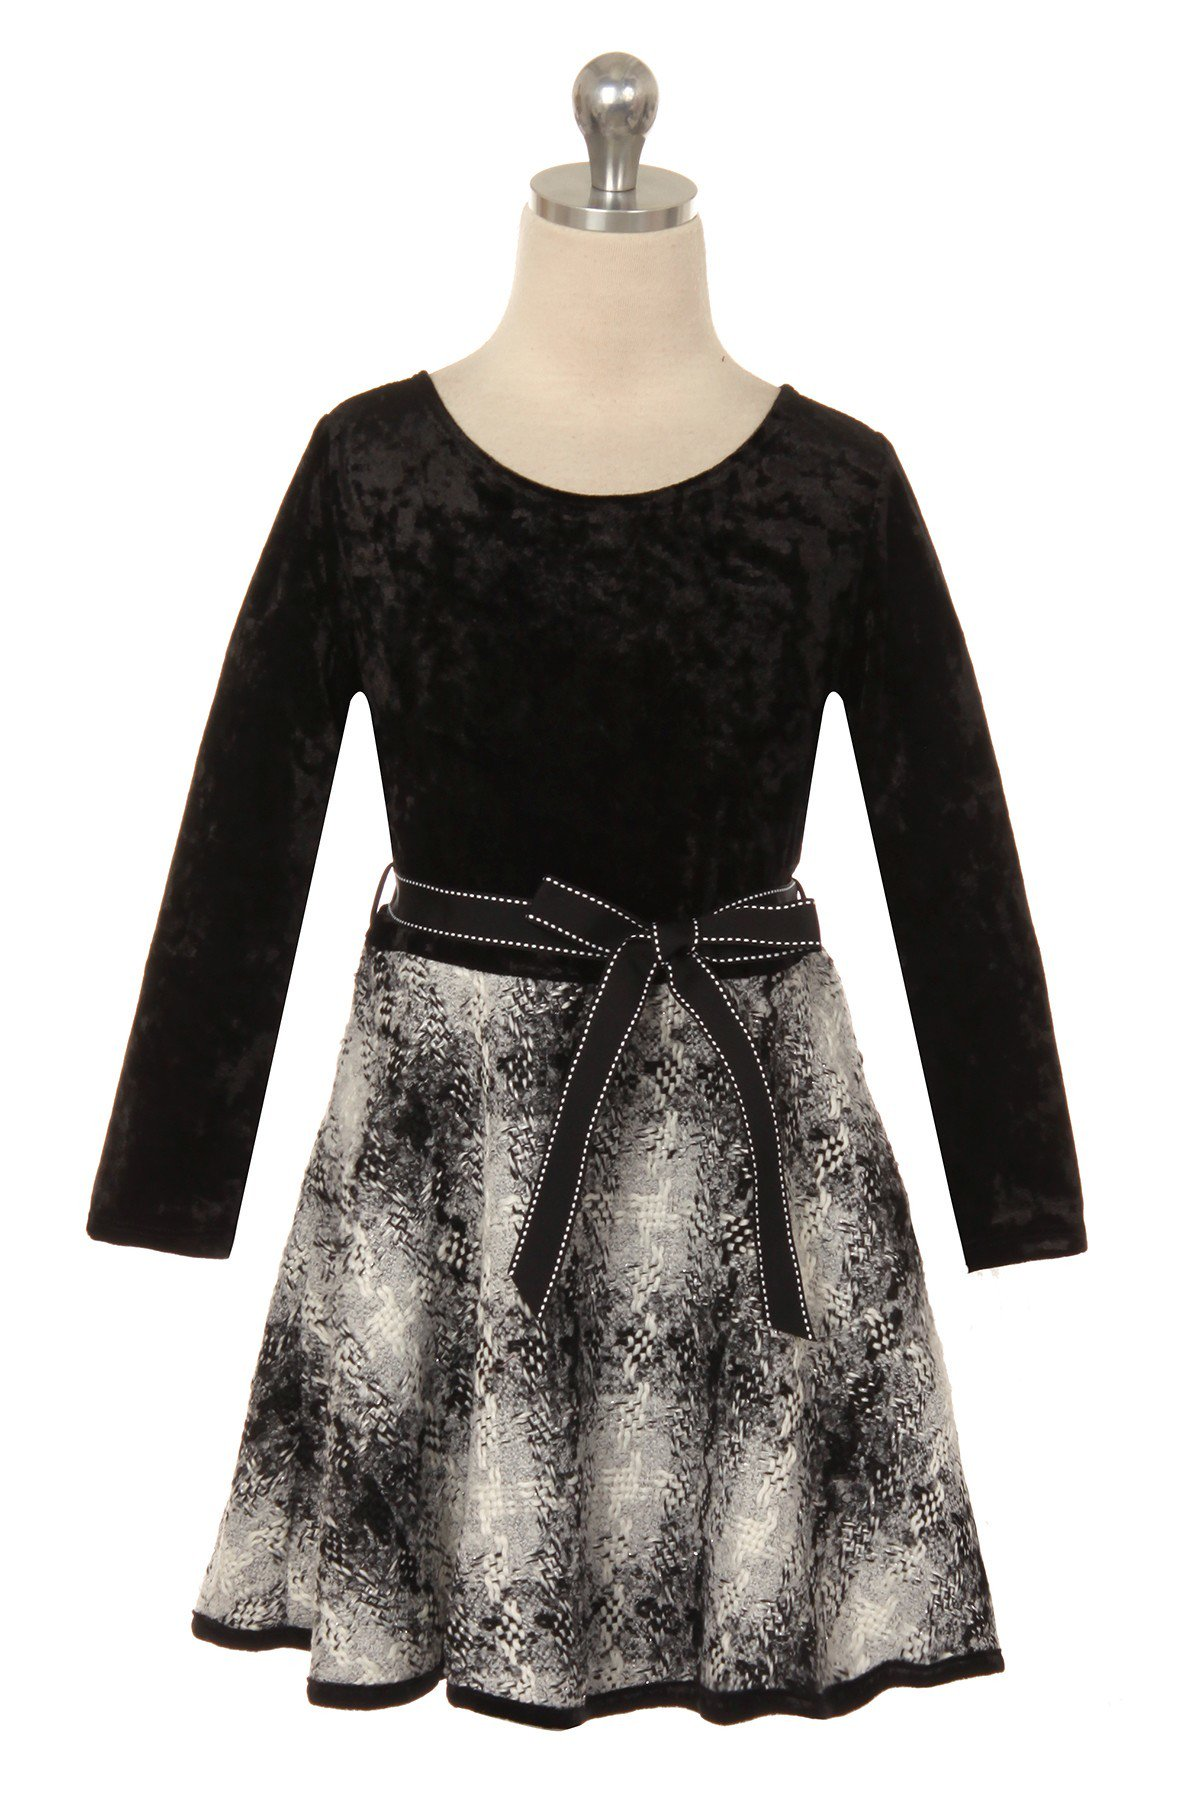 black and white plaid skirt